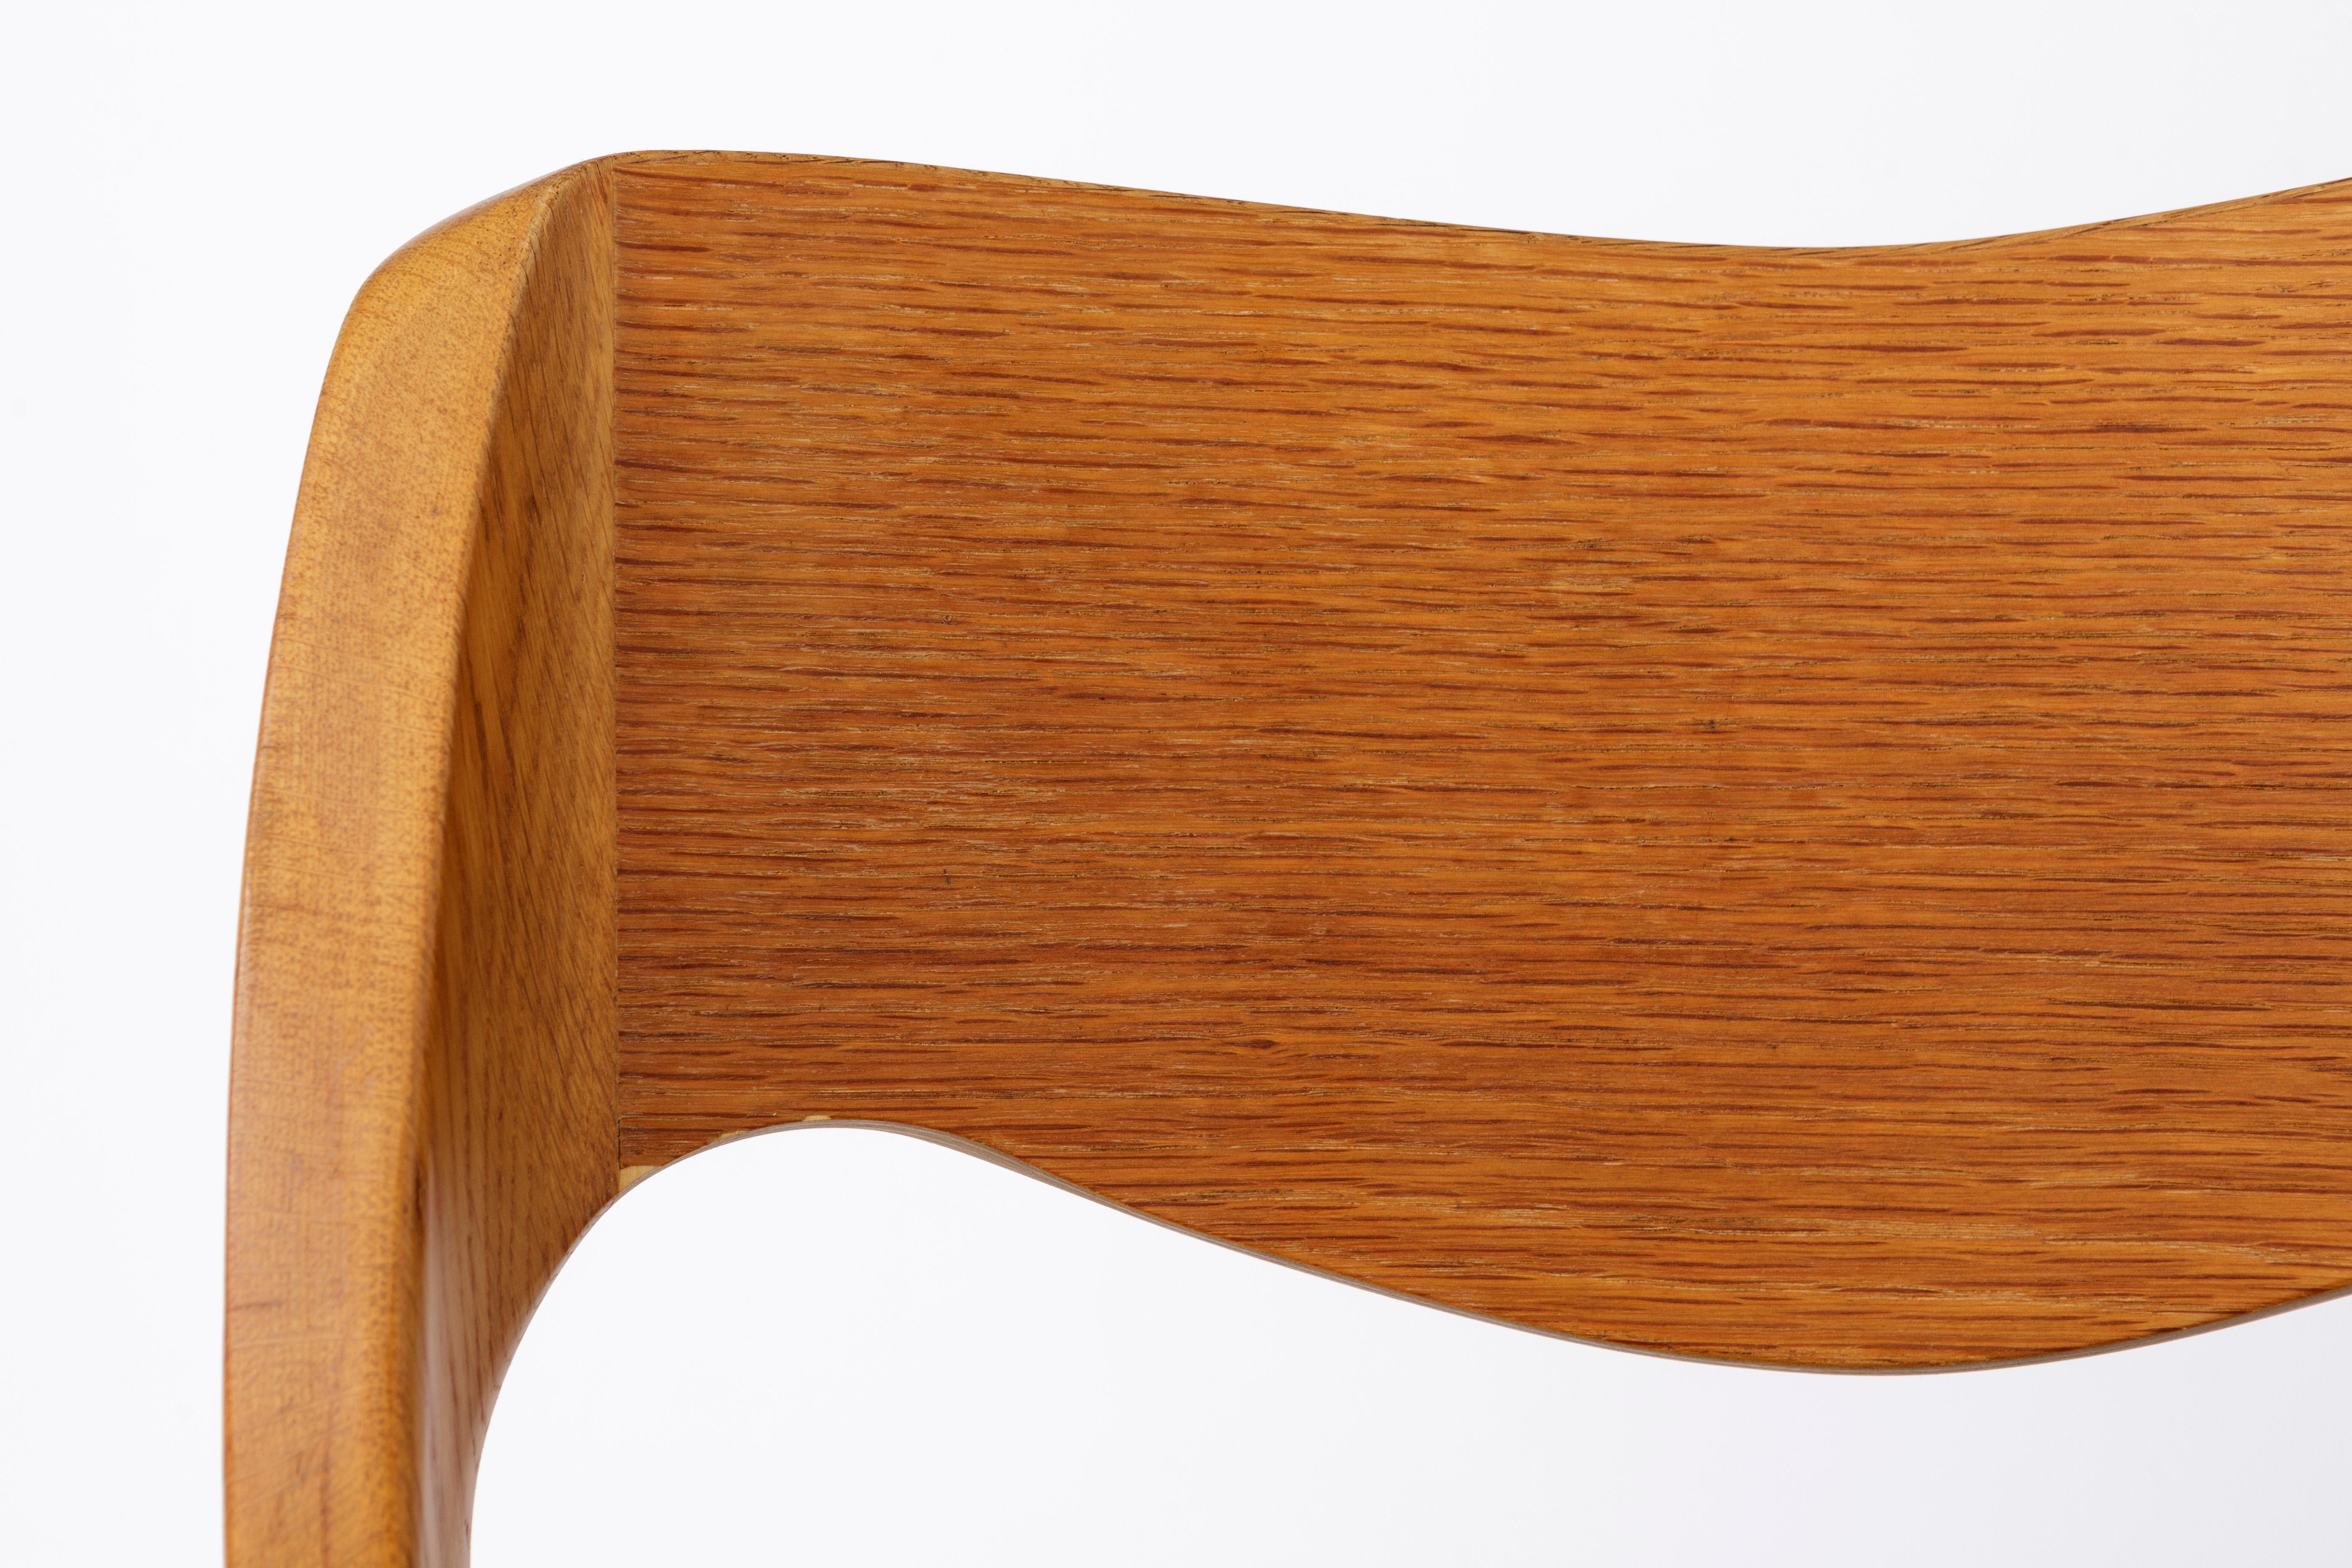 Mid-Century Modern 1 of 2 Niels Moller Chair, model 71 Oak, 1950s Vintage Danish